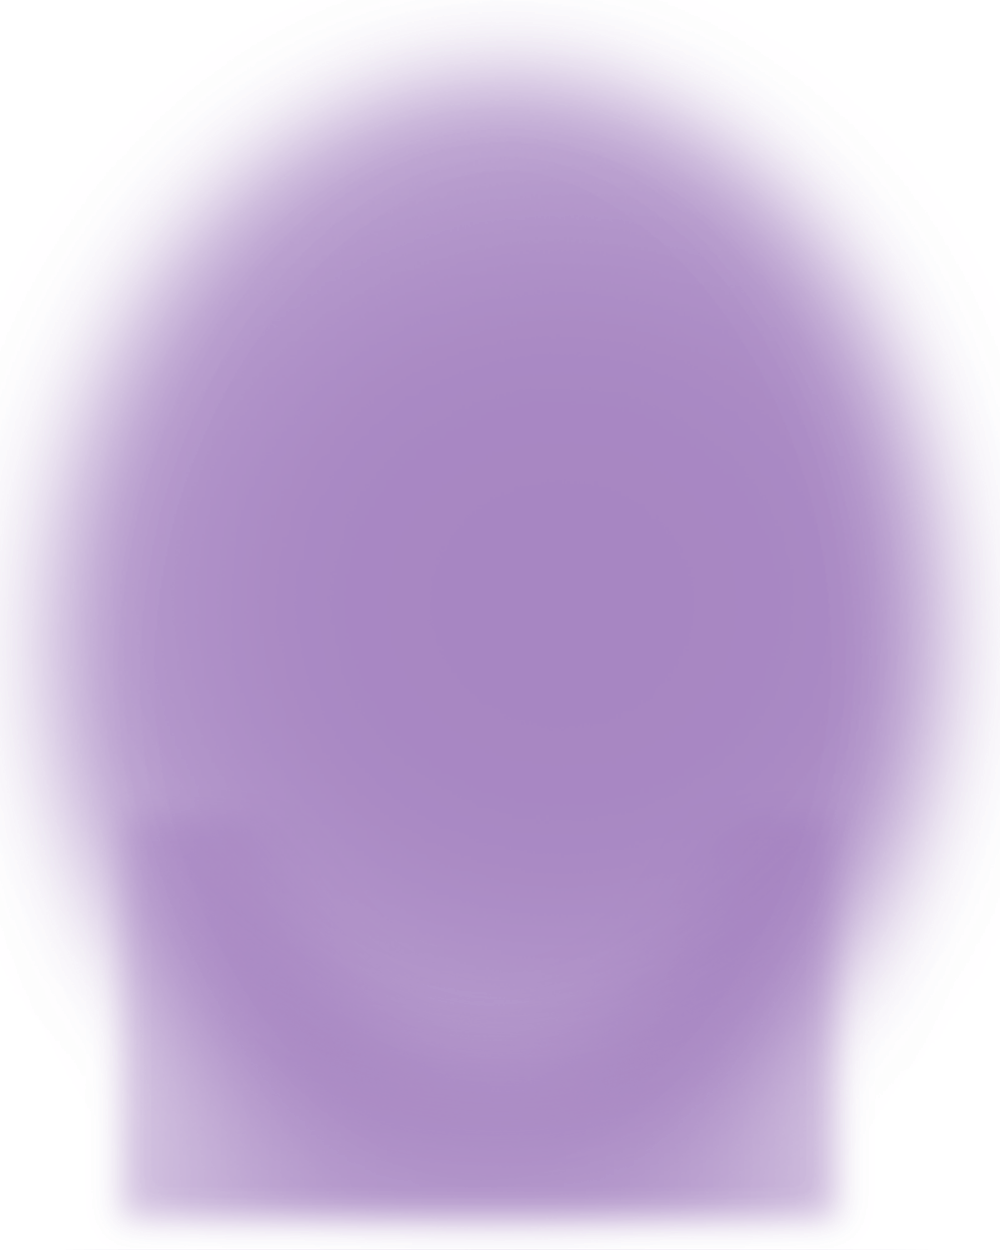 A purple background glow